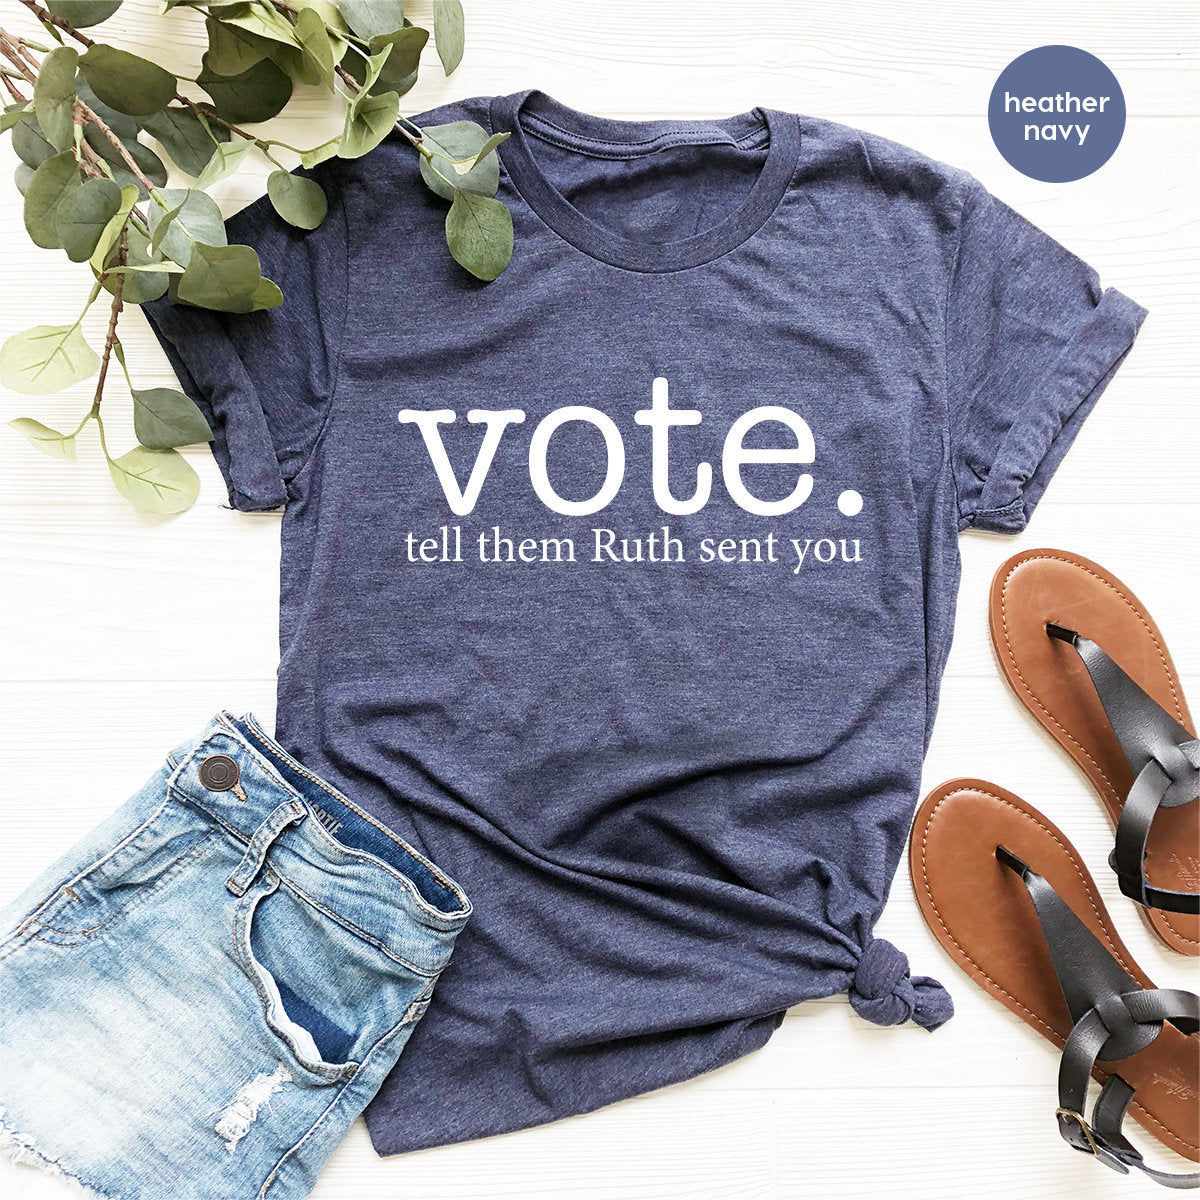 Ruth Bader Ginsburg Shirt, Vote Tell Them Ruth Sent You, Political Shirt, Feminist T-Shirt, Send Me RBG, Women's Rights Equality Shirt - Fastdeliverytees.com